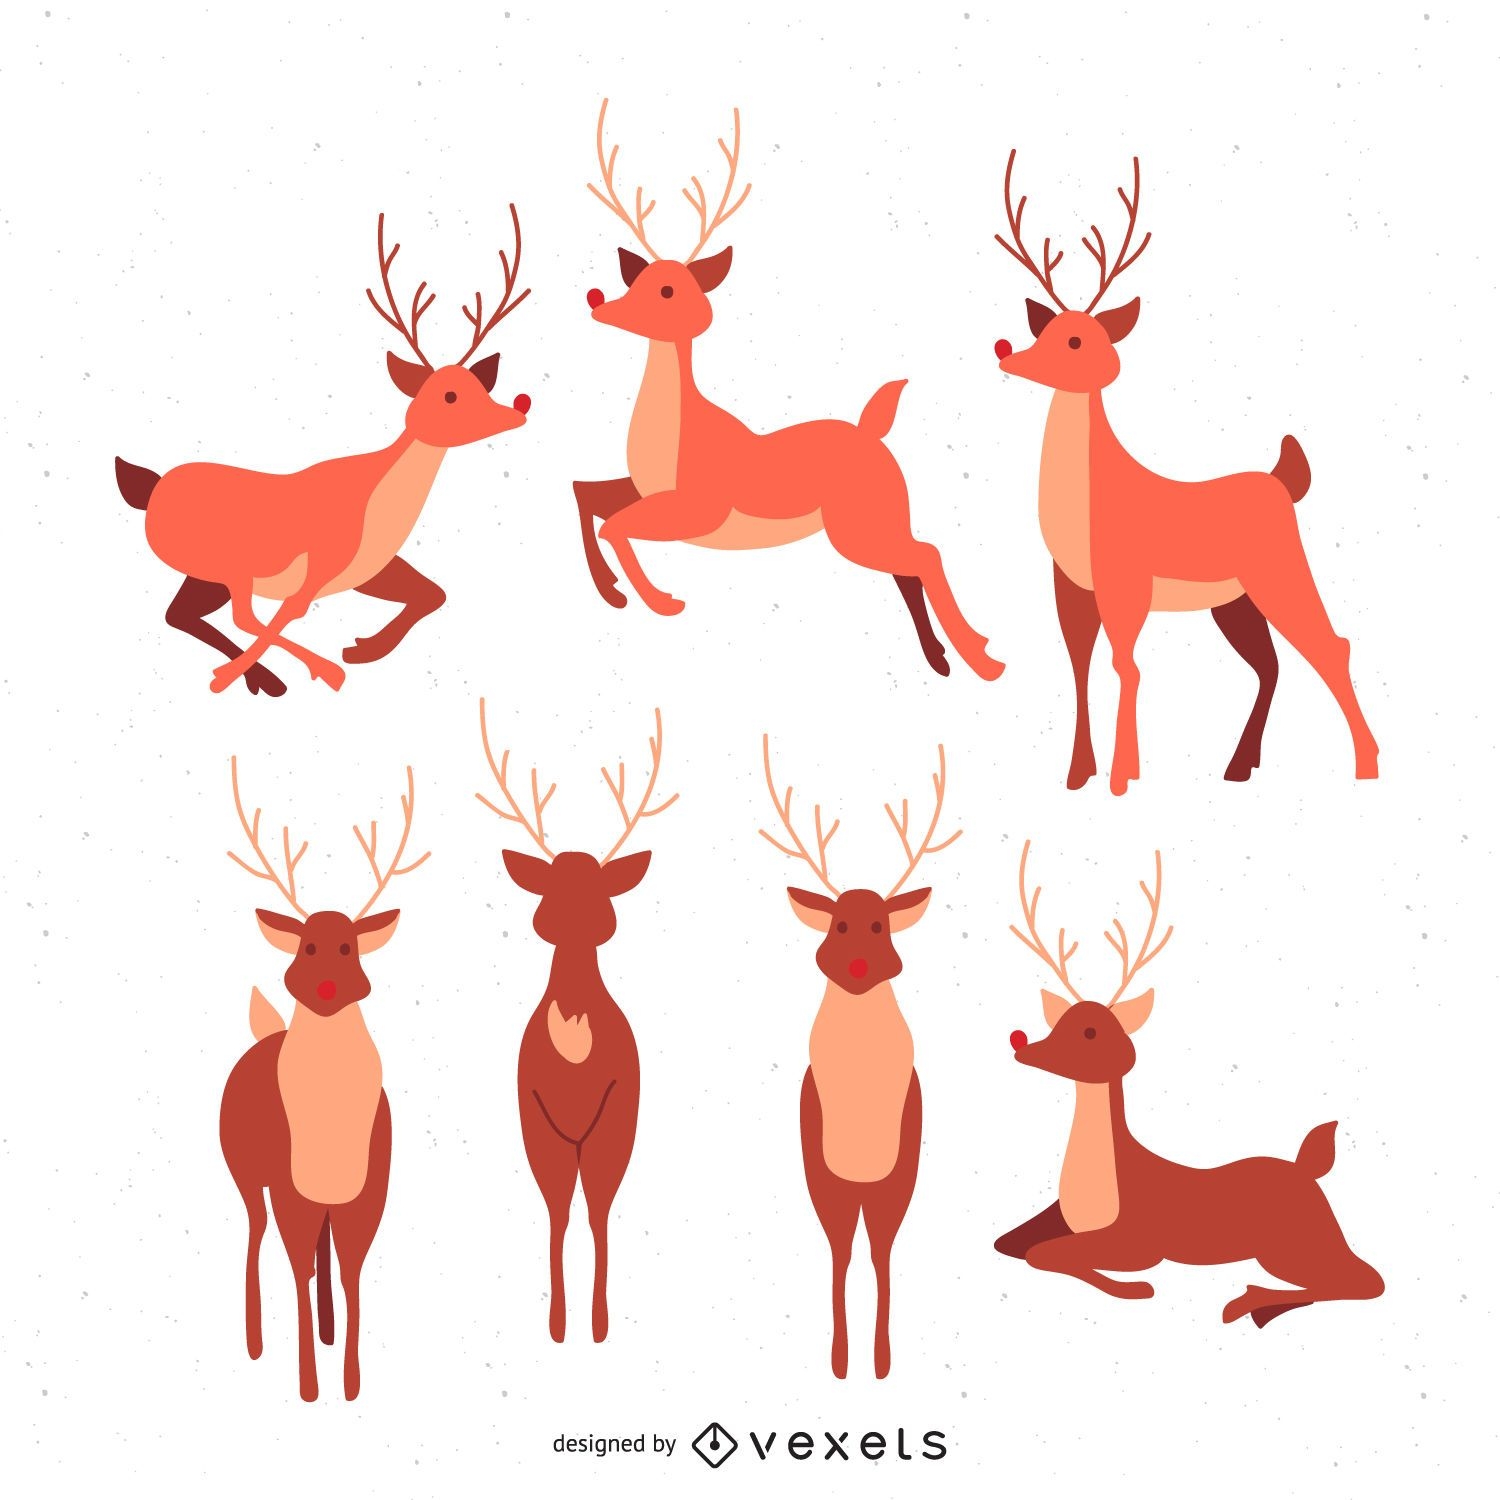 Stylized reindeer illustration set